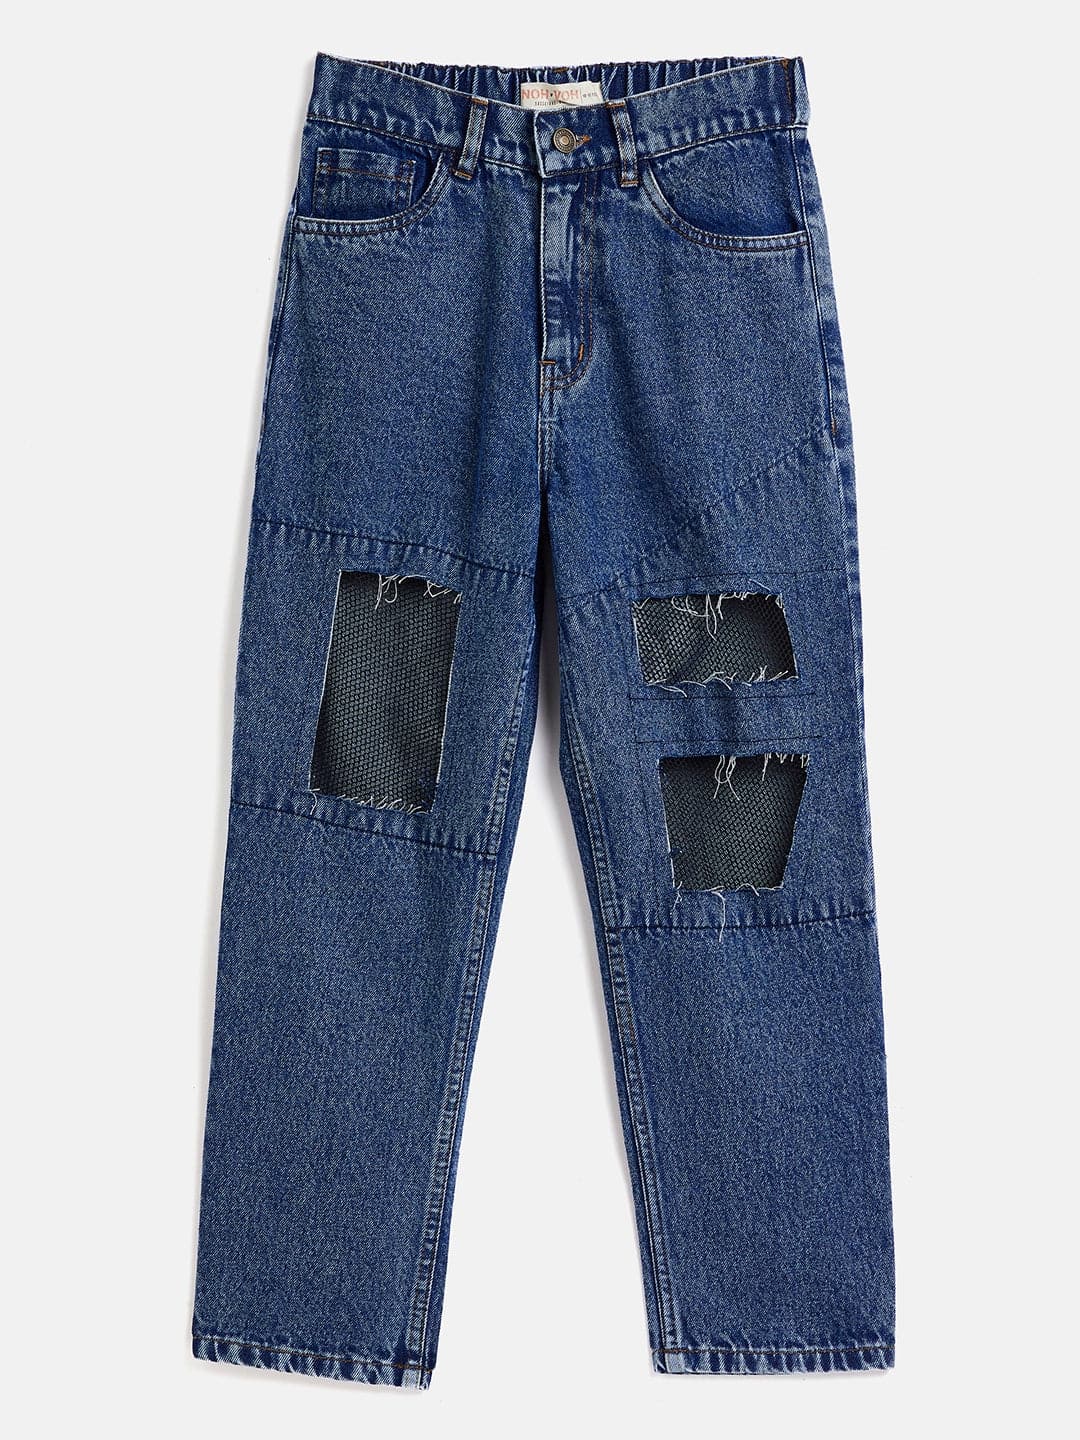 Buy Girls Blue Mesh Net Cut Out Jeans Online at Sassafras